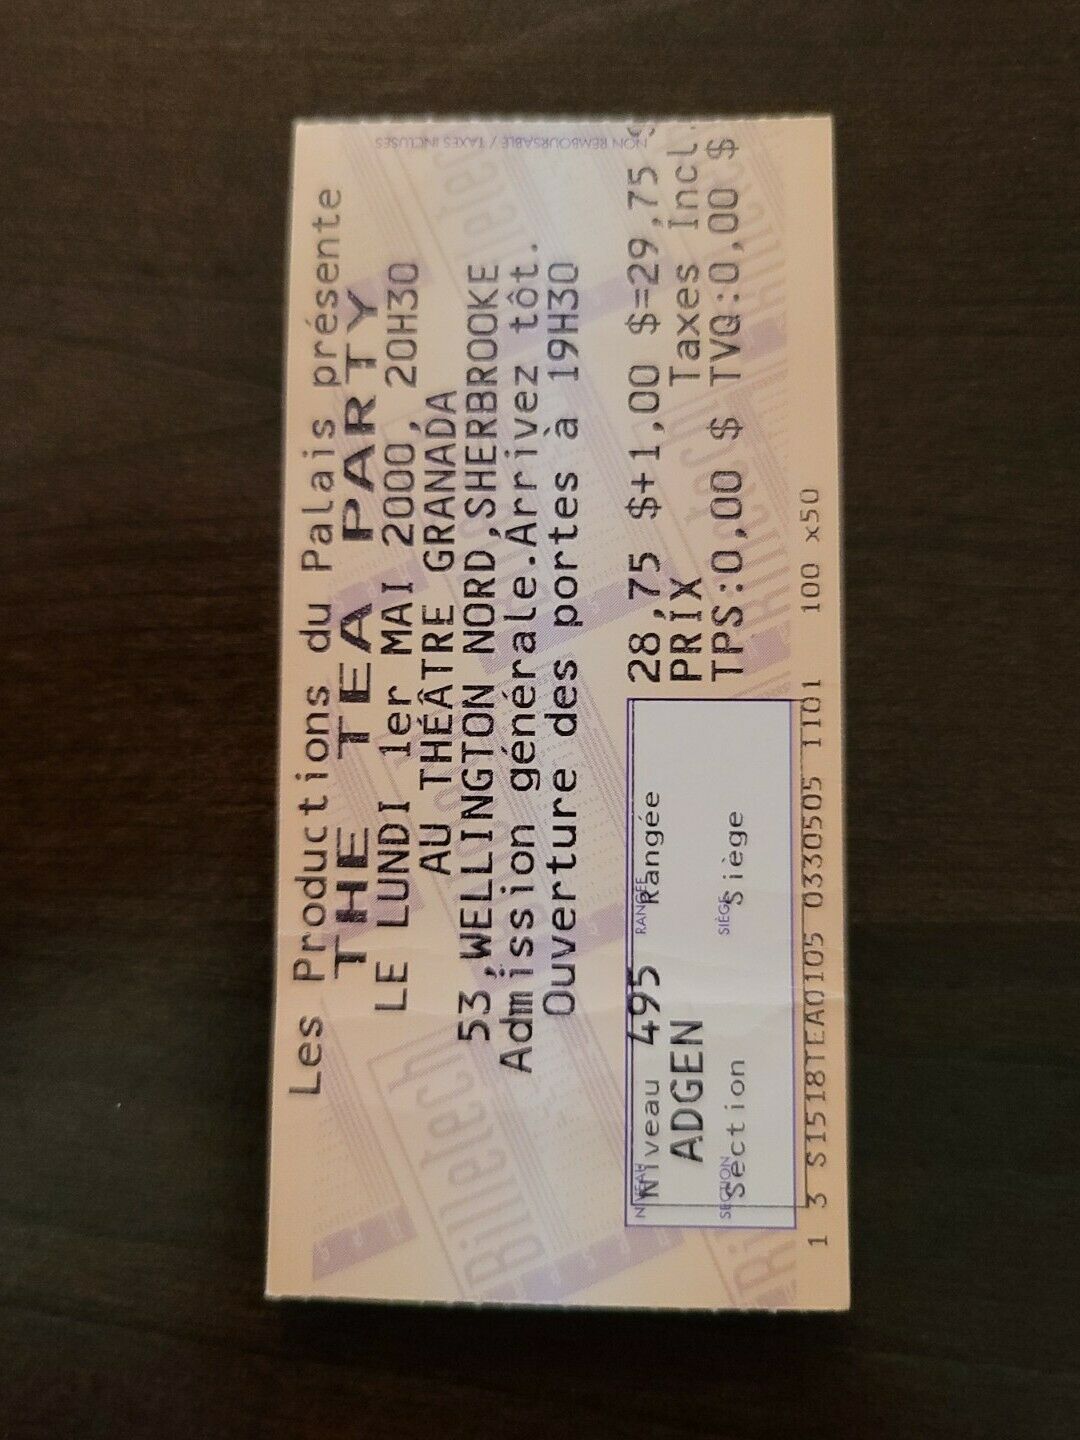 The Tea Party 2000, Sherbrooke Au Theater Original Concert Ticket Stub